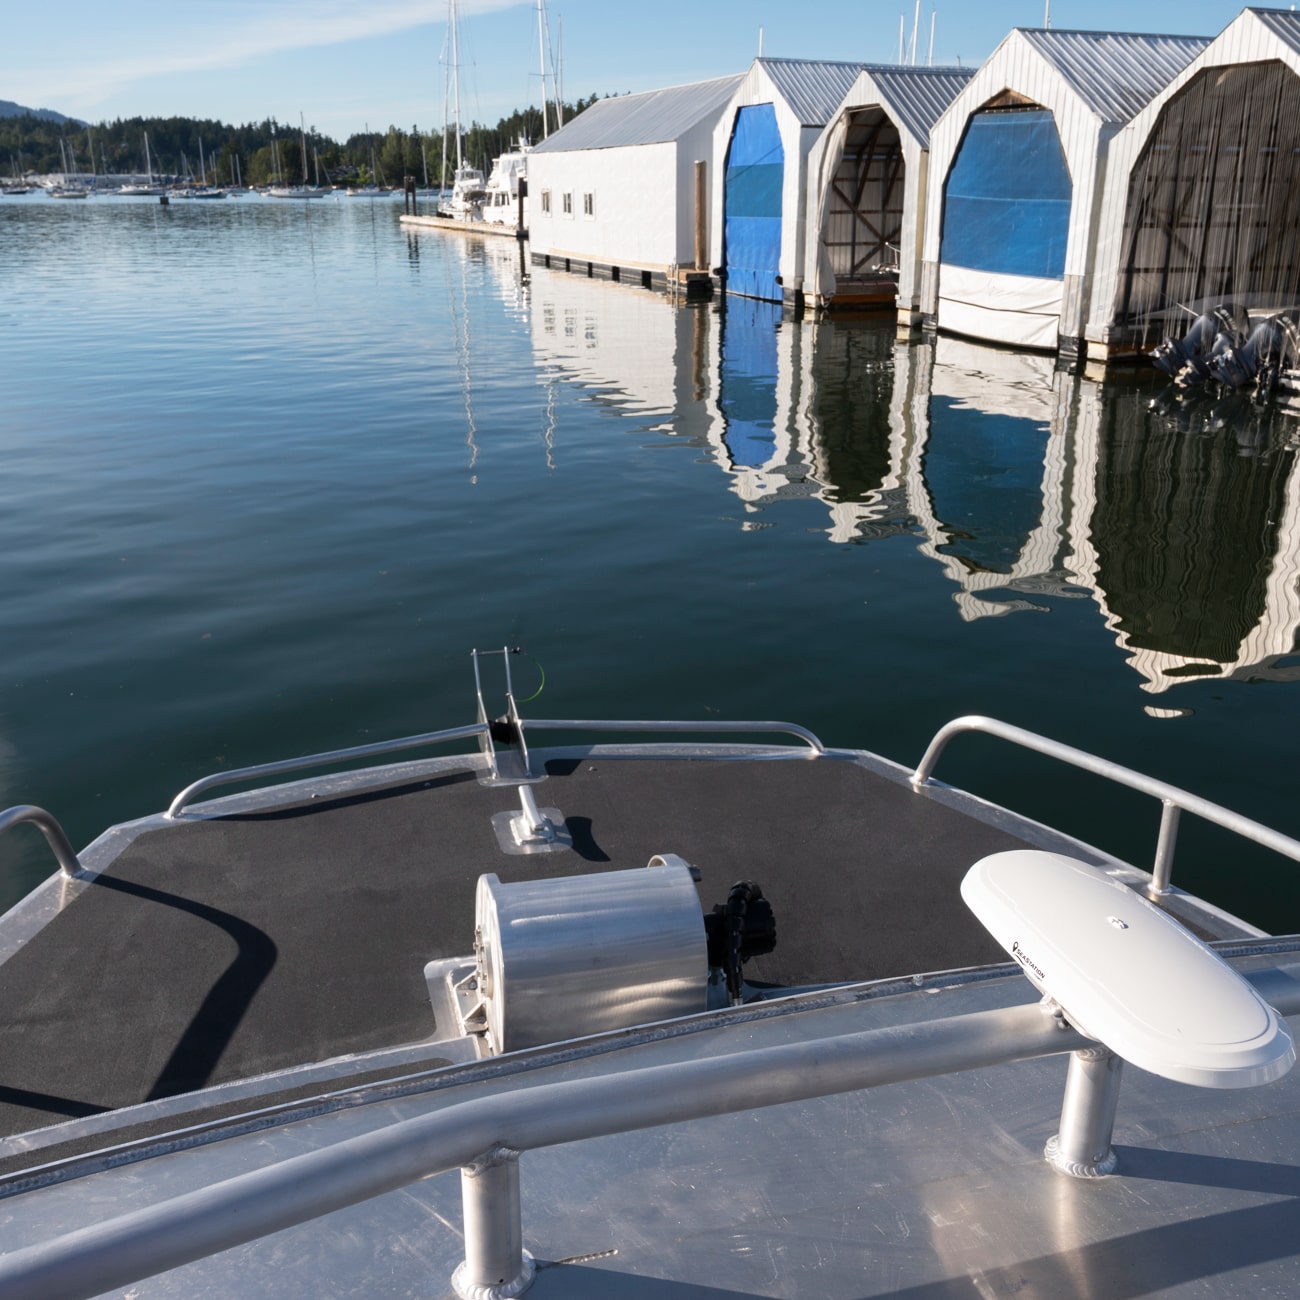 36 foot aluminum Cuddy Cabin boat manufactured Sidney BC British Columbia Canada by JR Marine